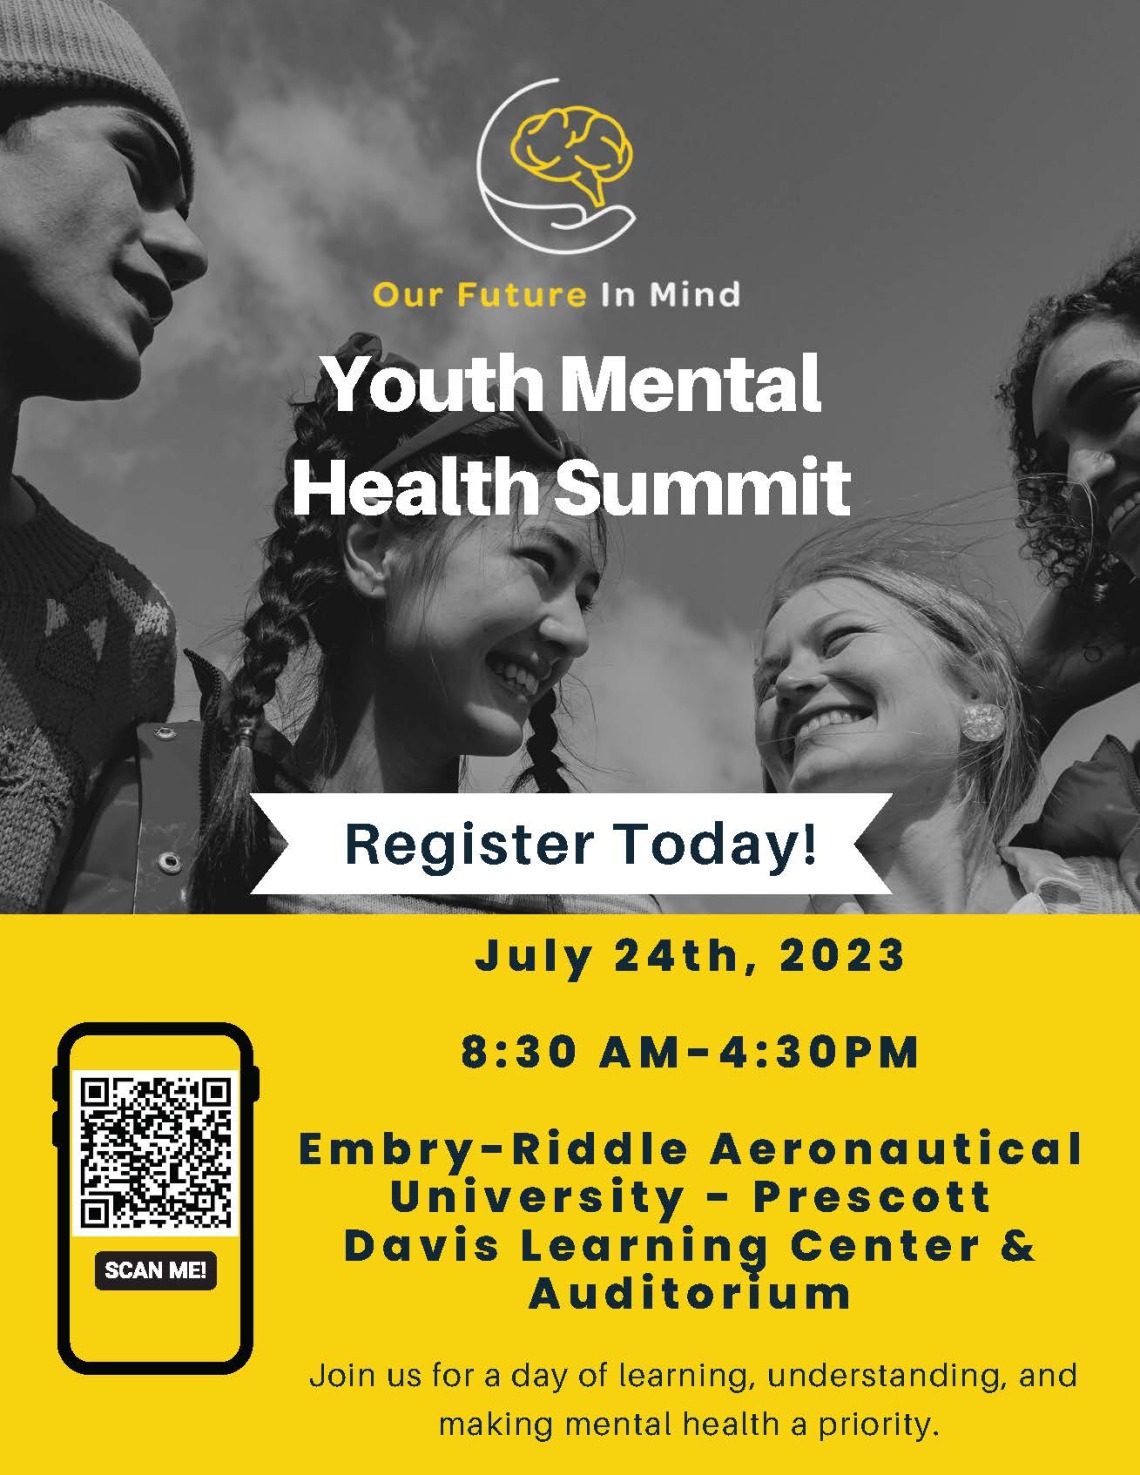 flyer for youth mental health summit in Prescott